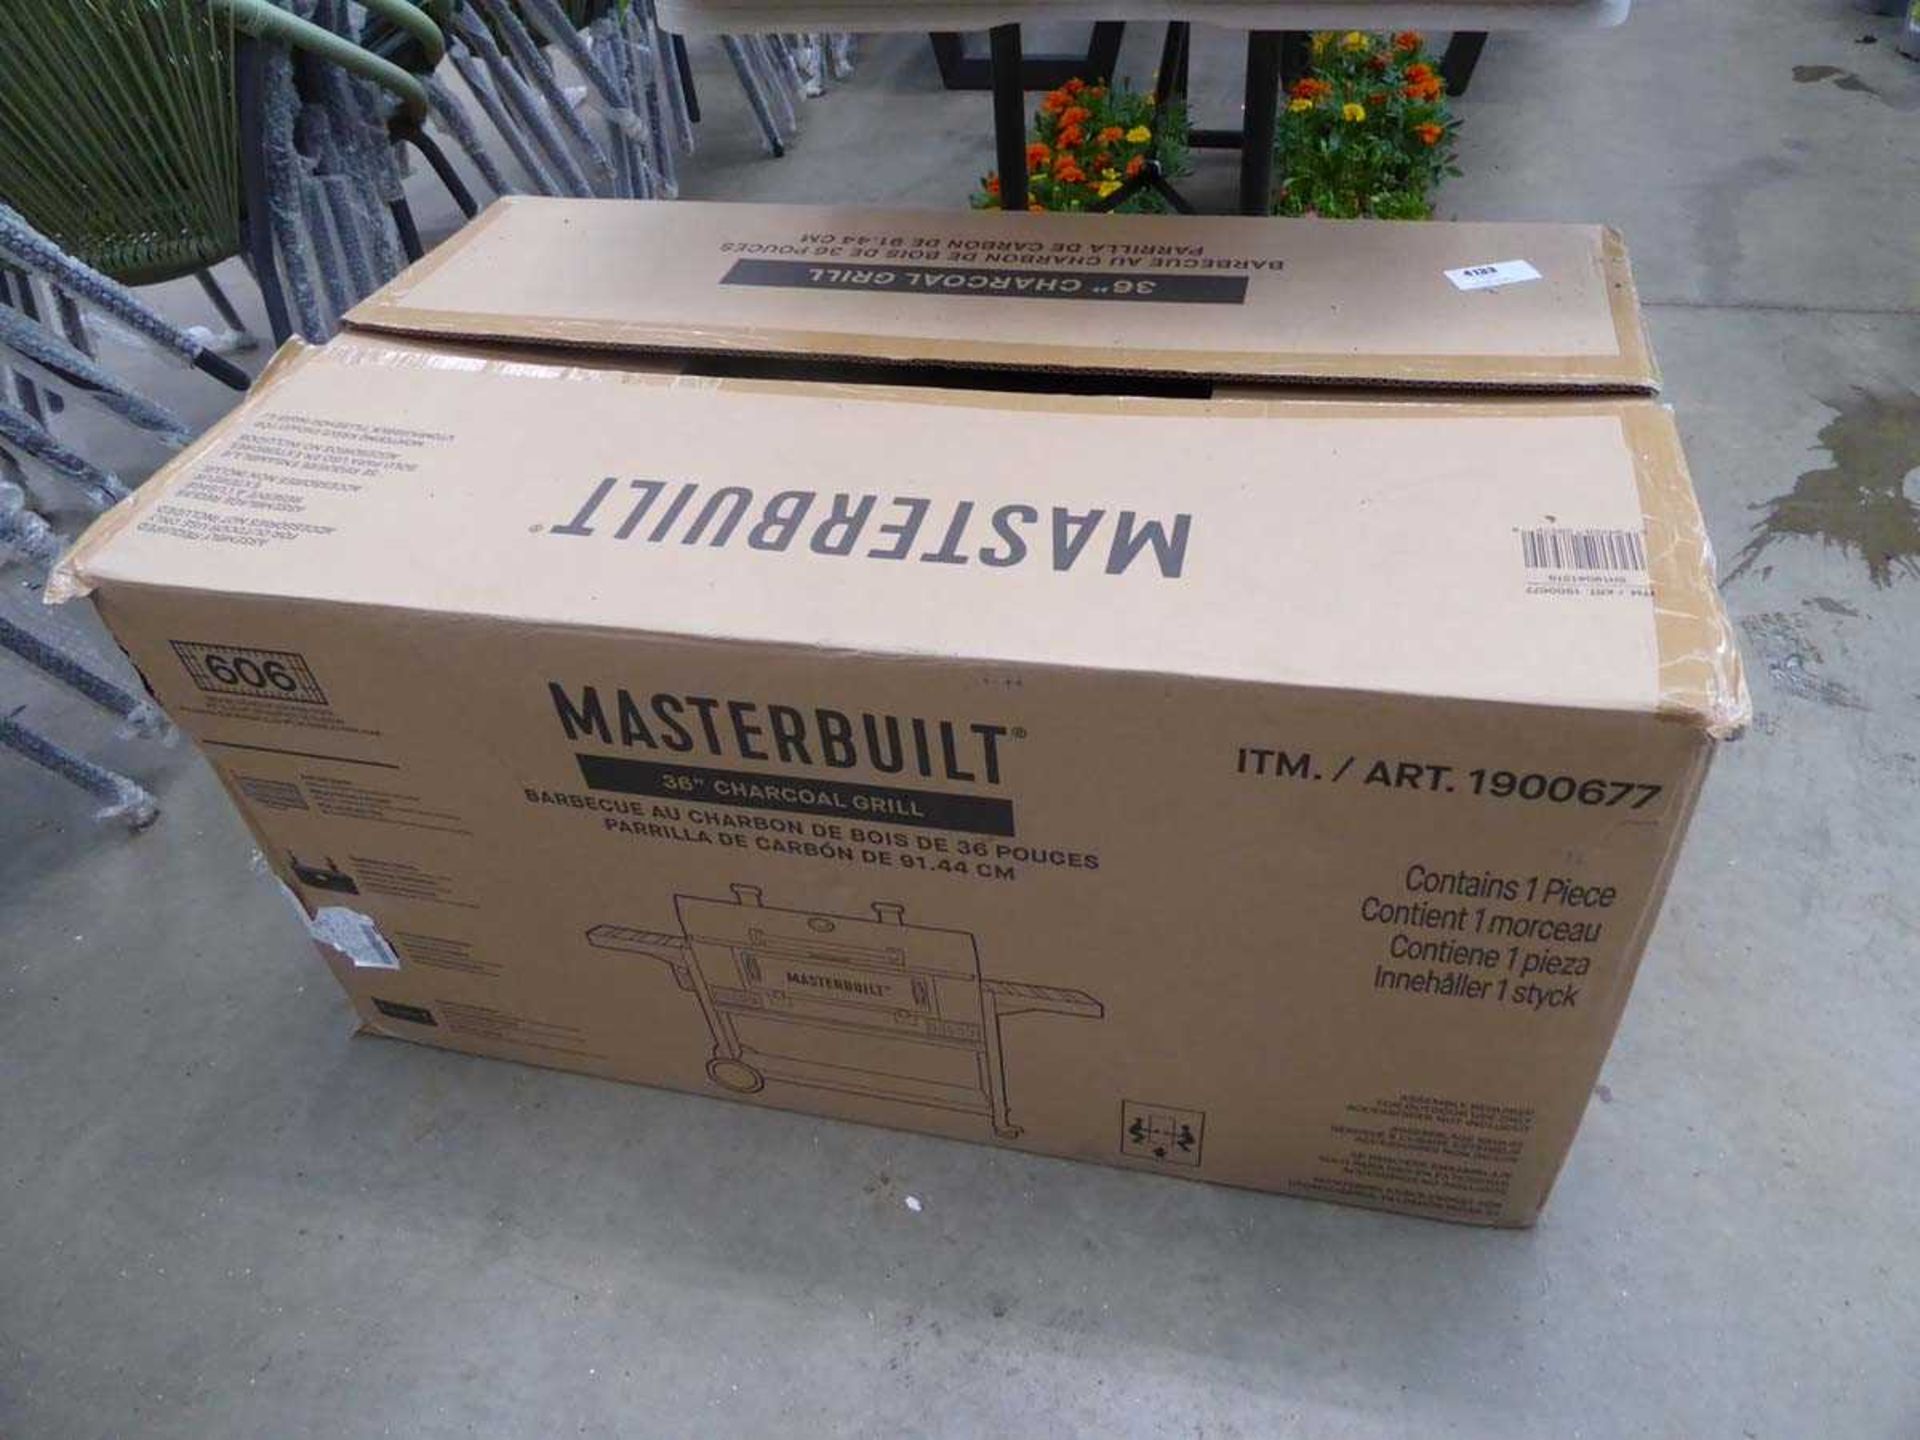 +VAT Boxed master built charcoal BBQ